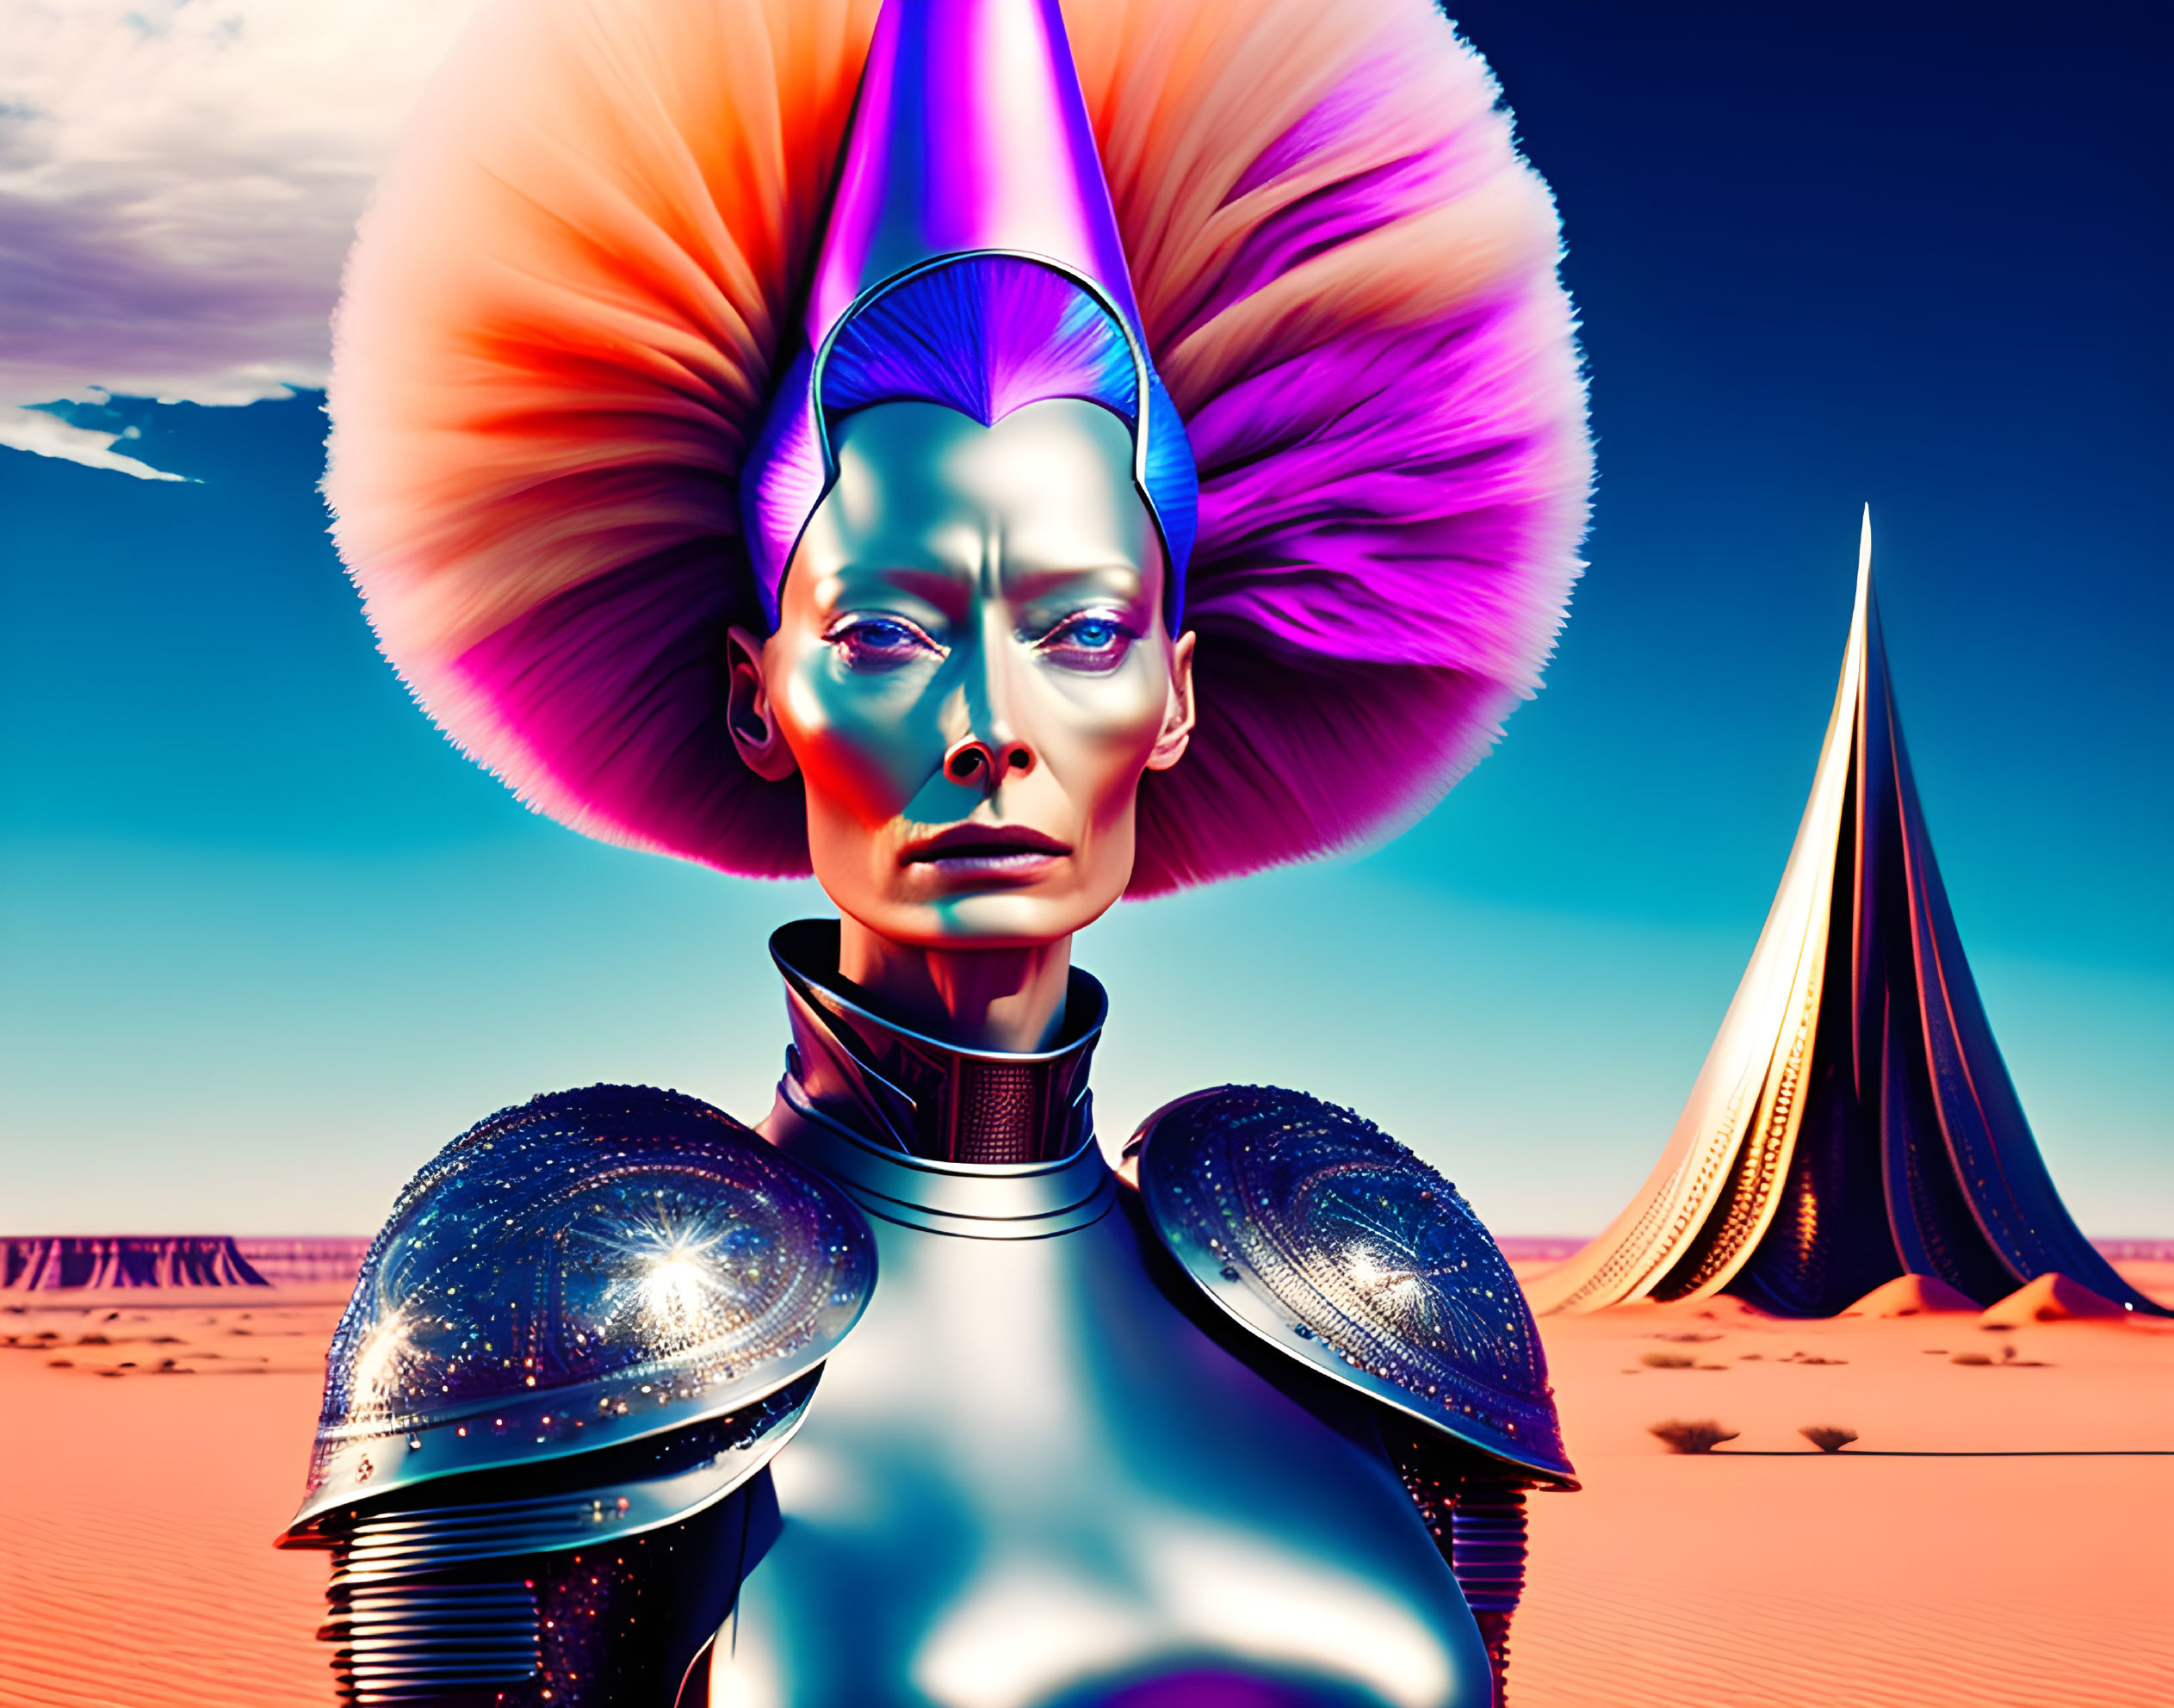 Colorful futuristic alien with intricate headpiece in desert landscape.